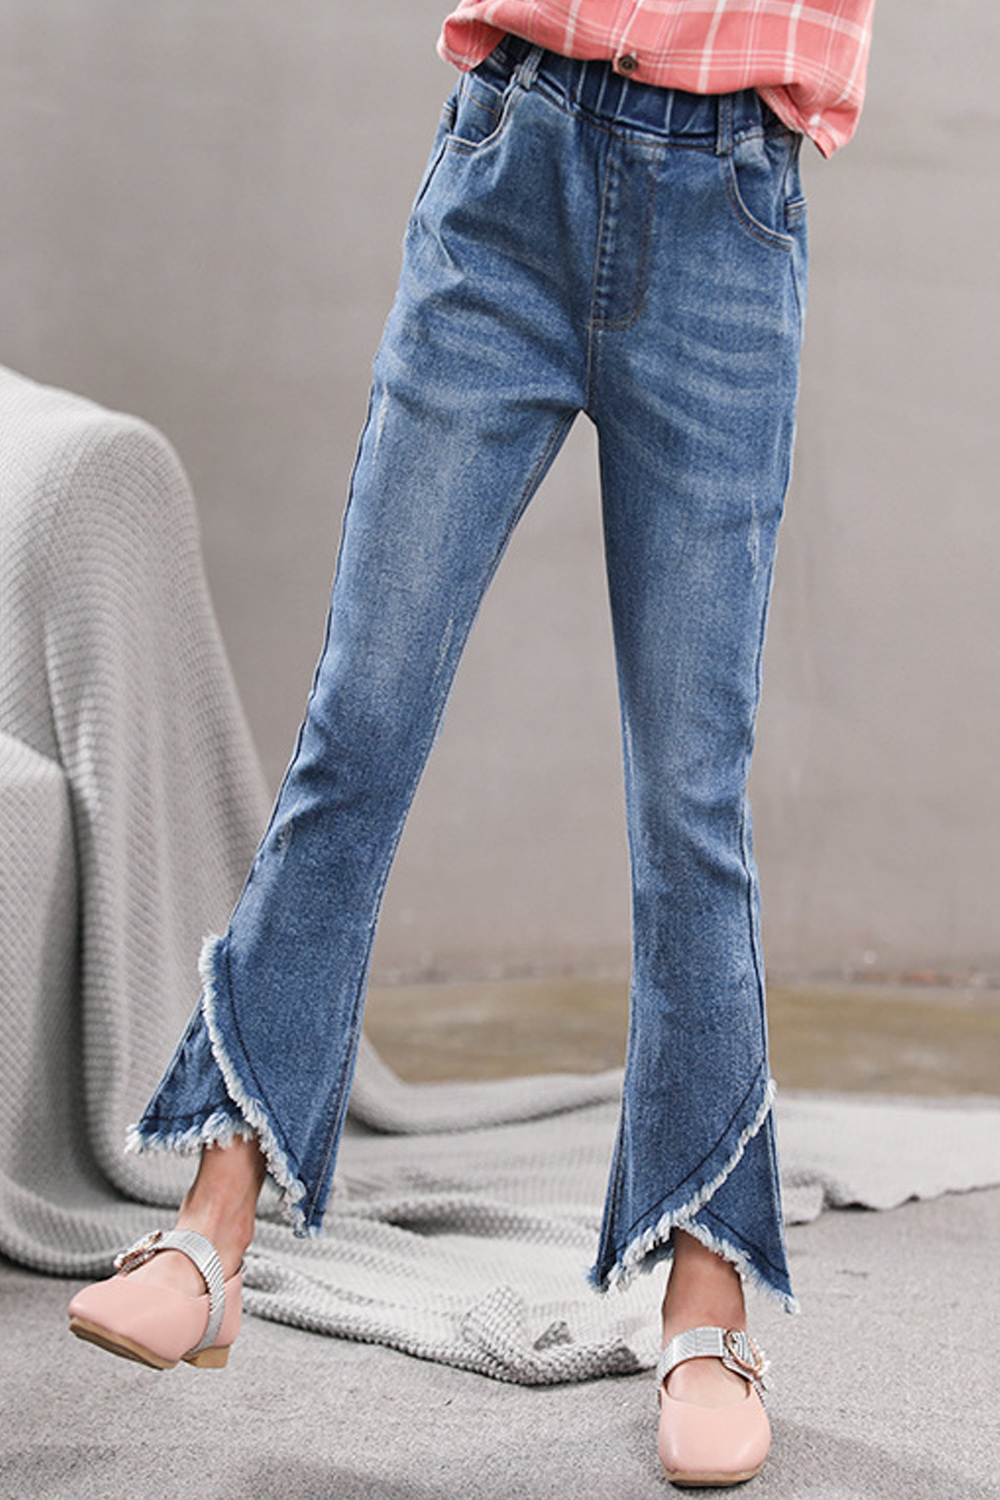 loafer jeans girl